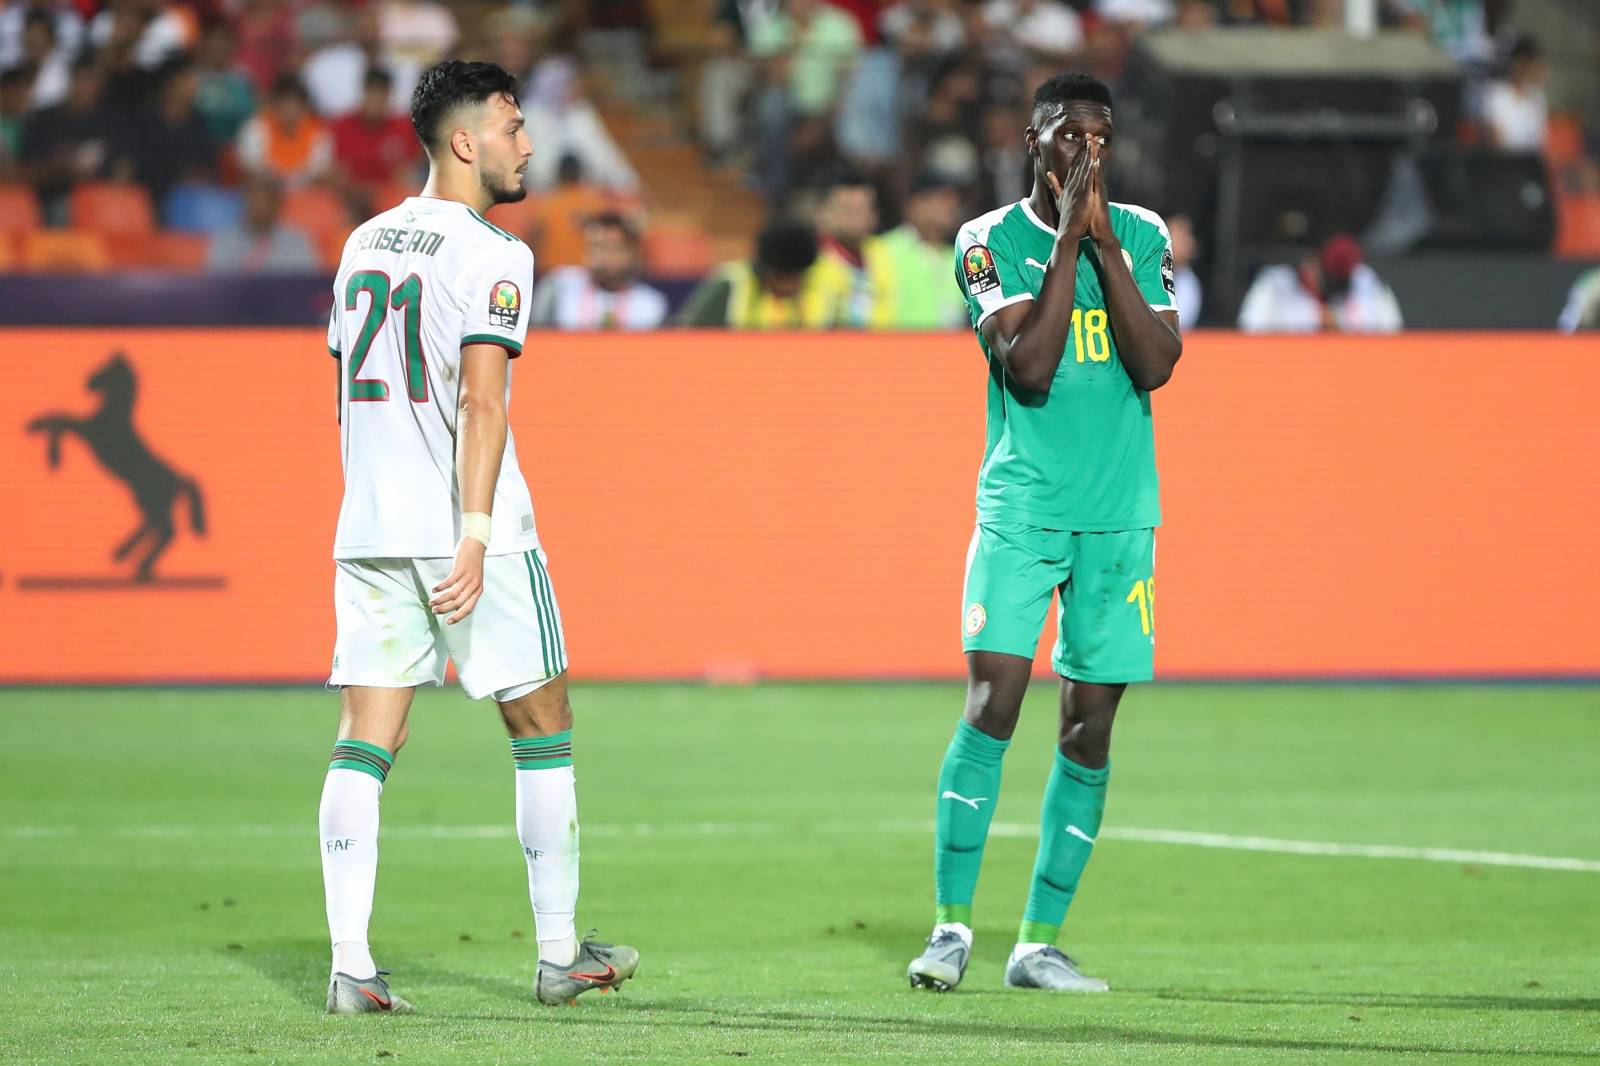 2019 Africa Cup of Nations - Senegal vs Algeria